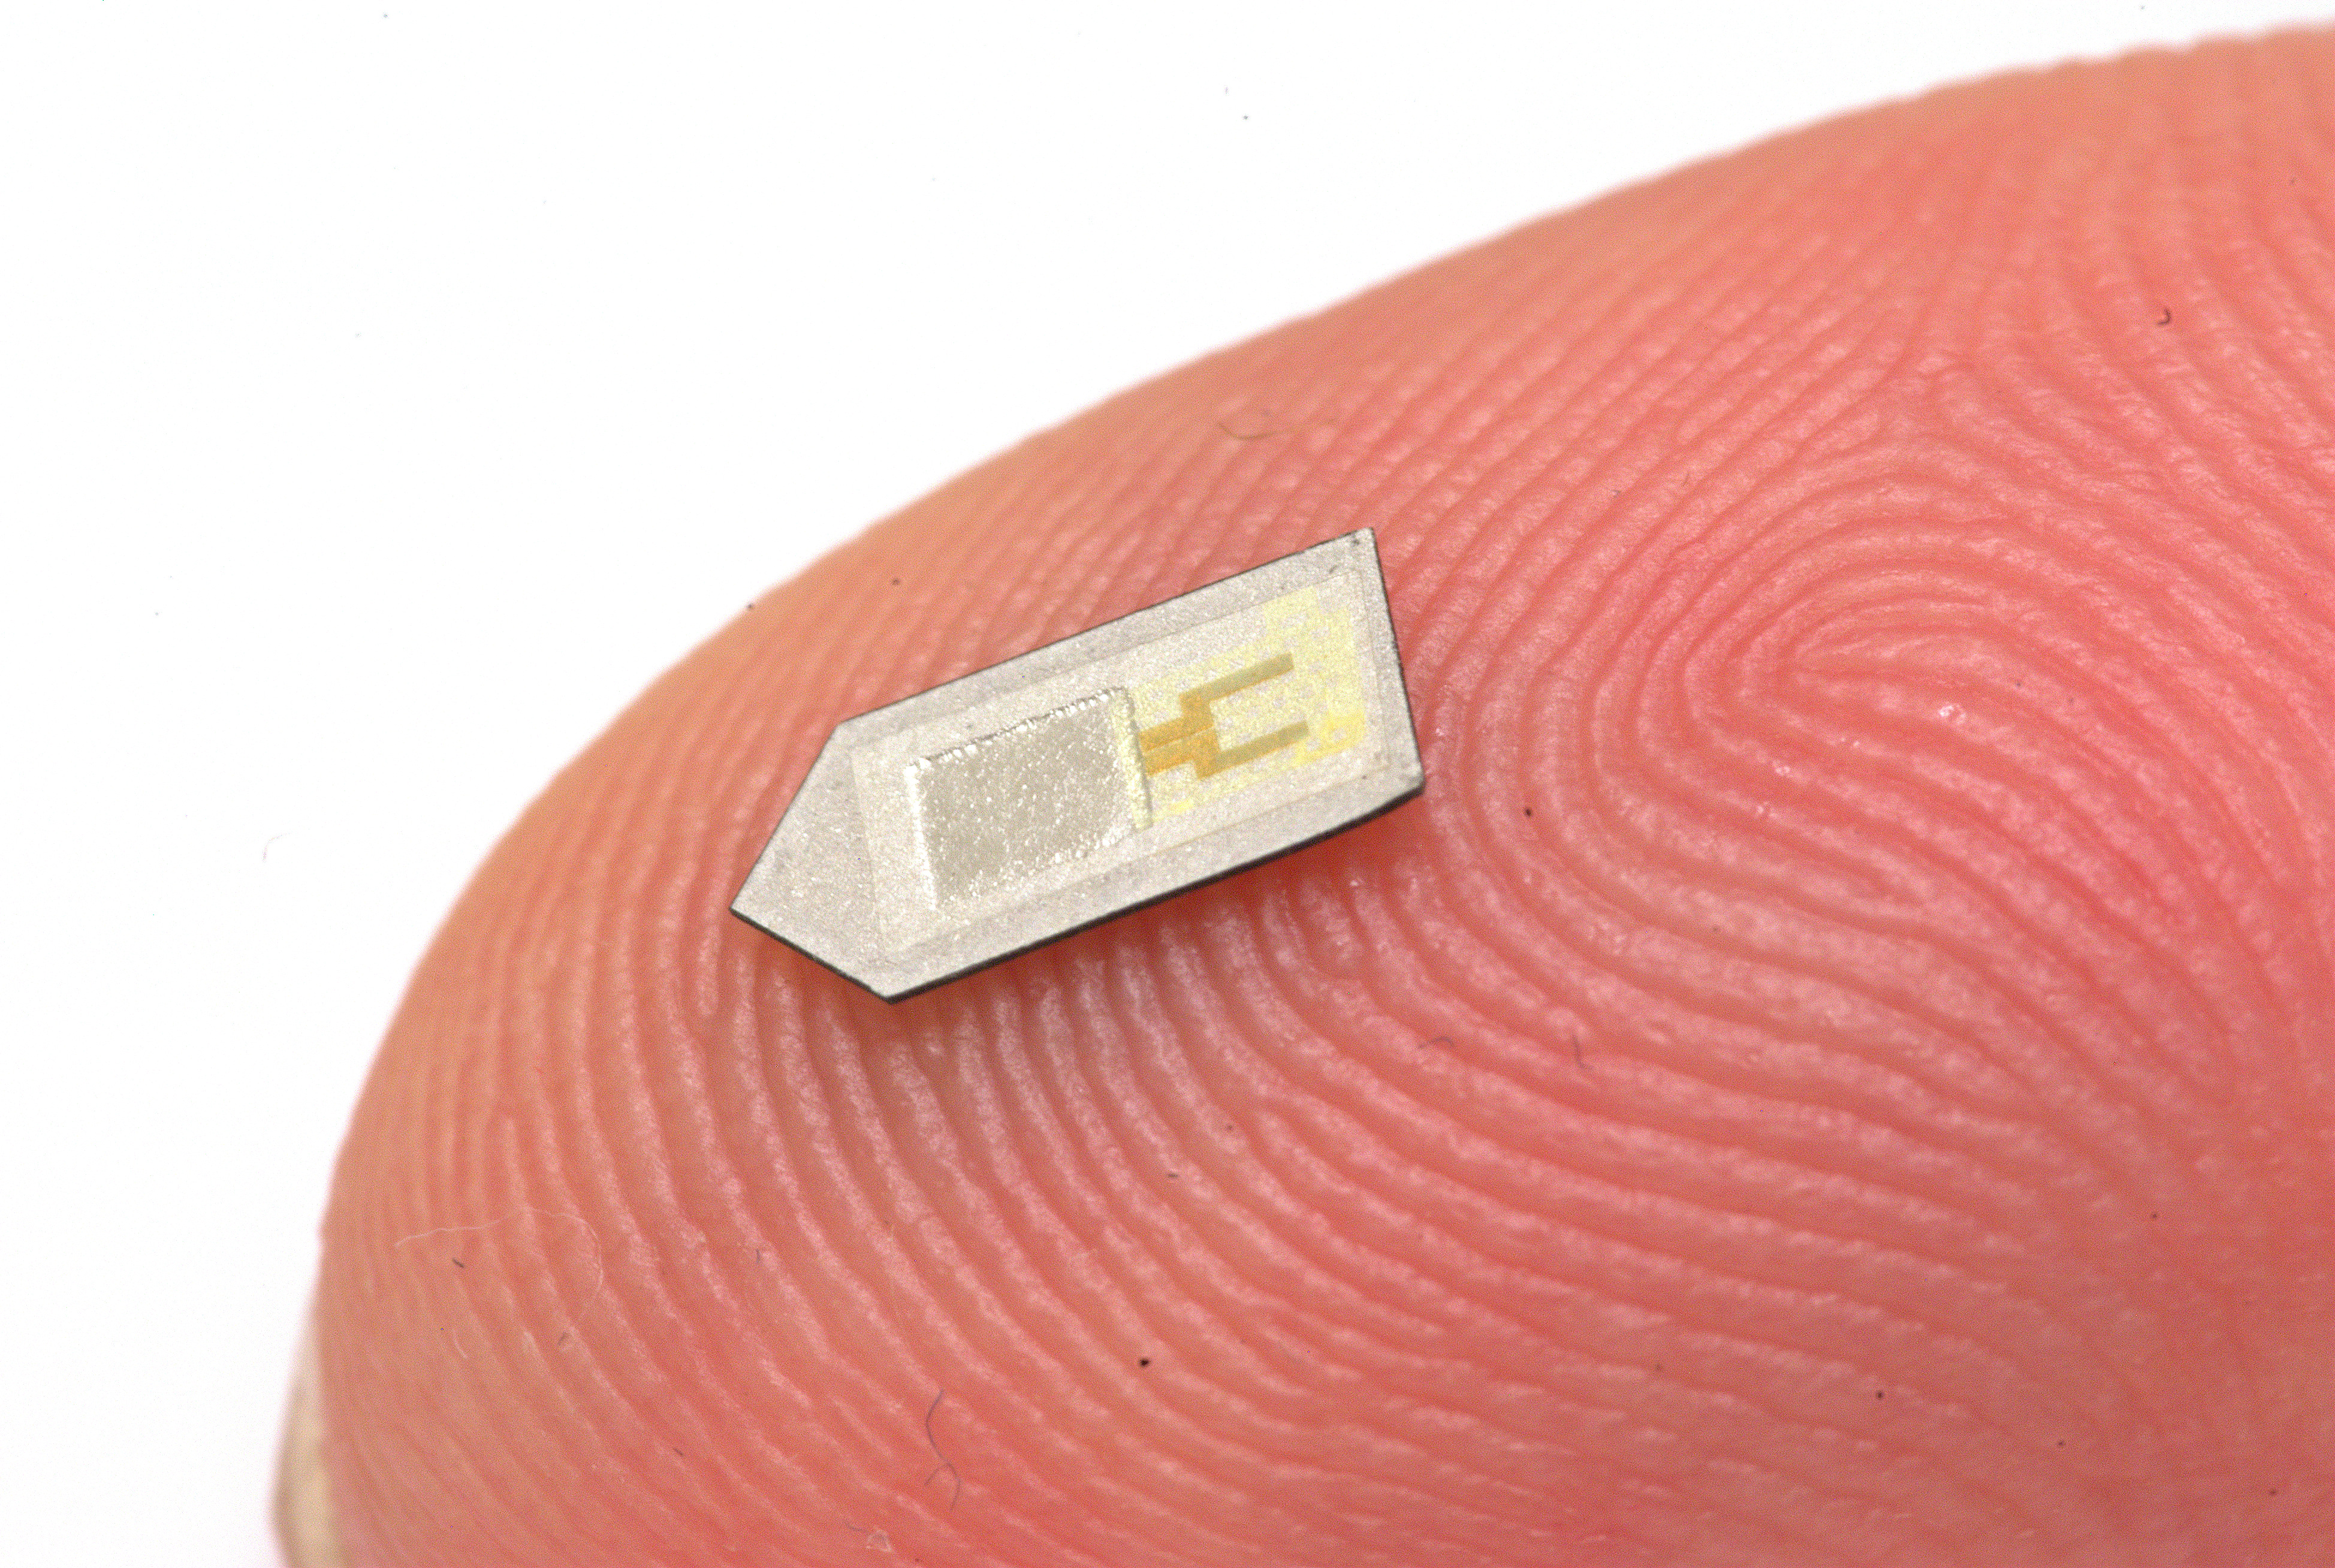 Tiny implanted sensors monitor brain injuries, then dissolve away - CBS News